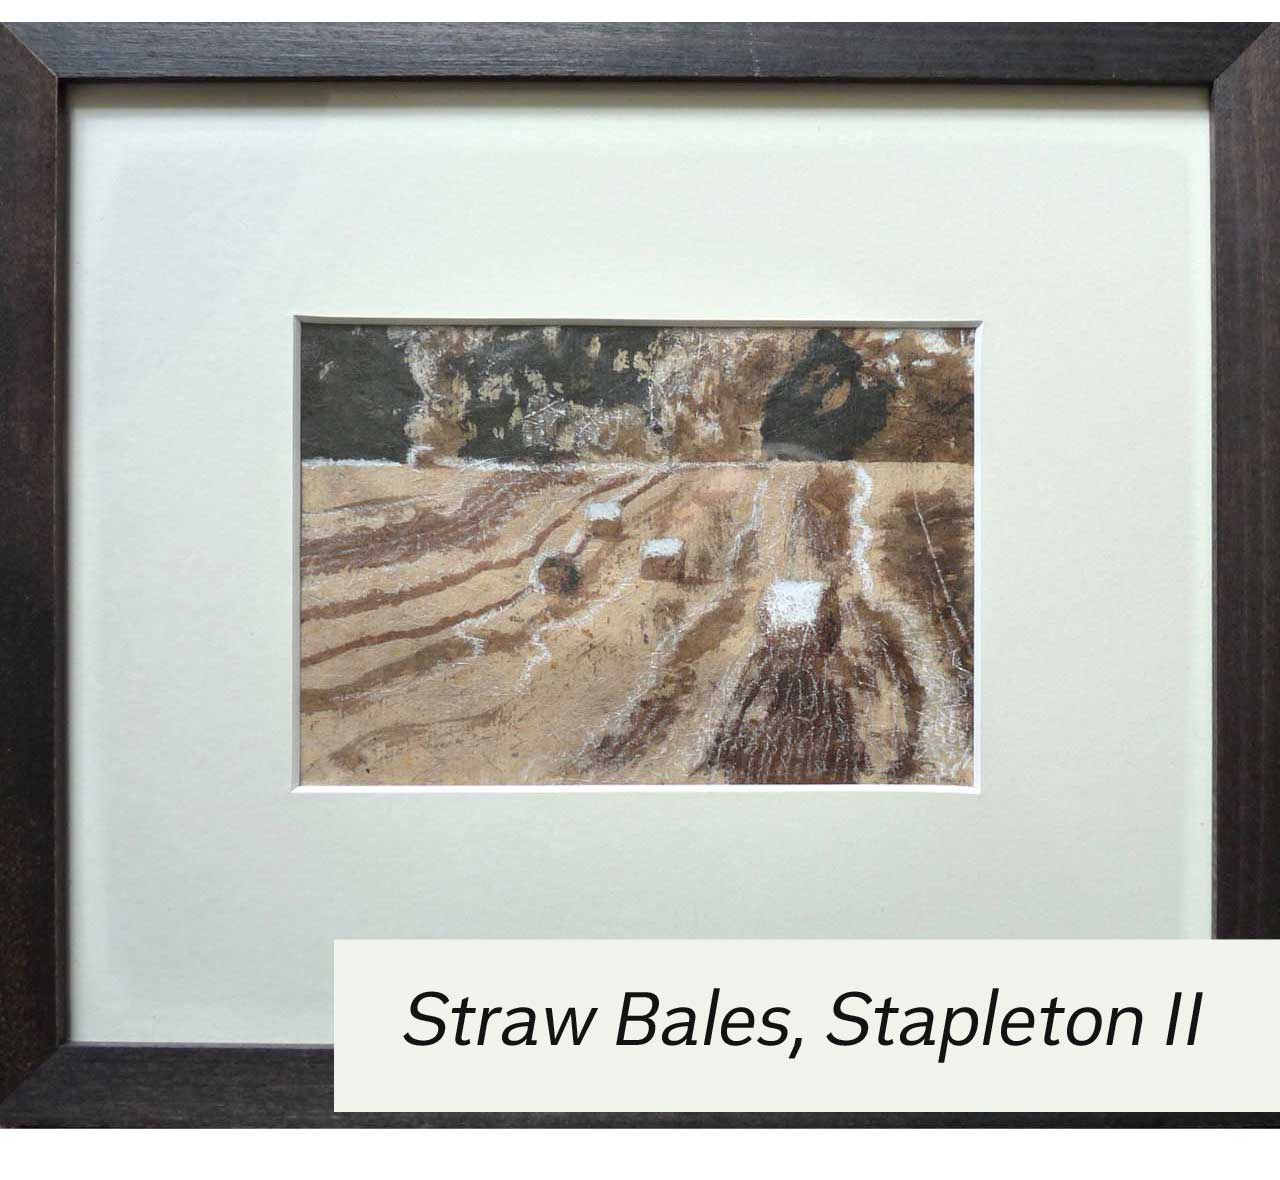 Straw Bales, Moor Farm, Stapleton II by Simon Dorrell